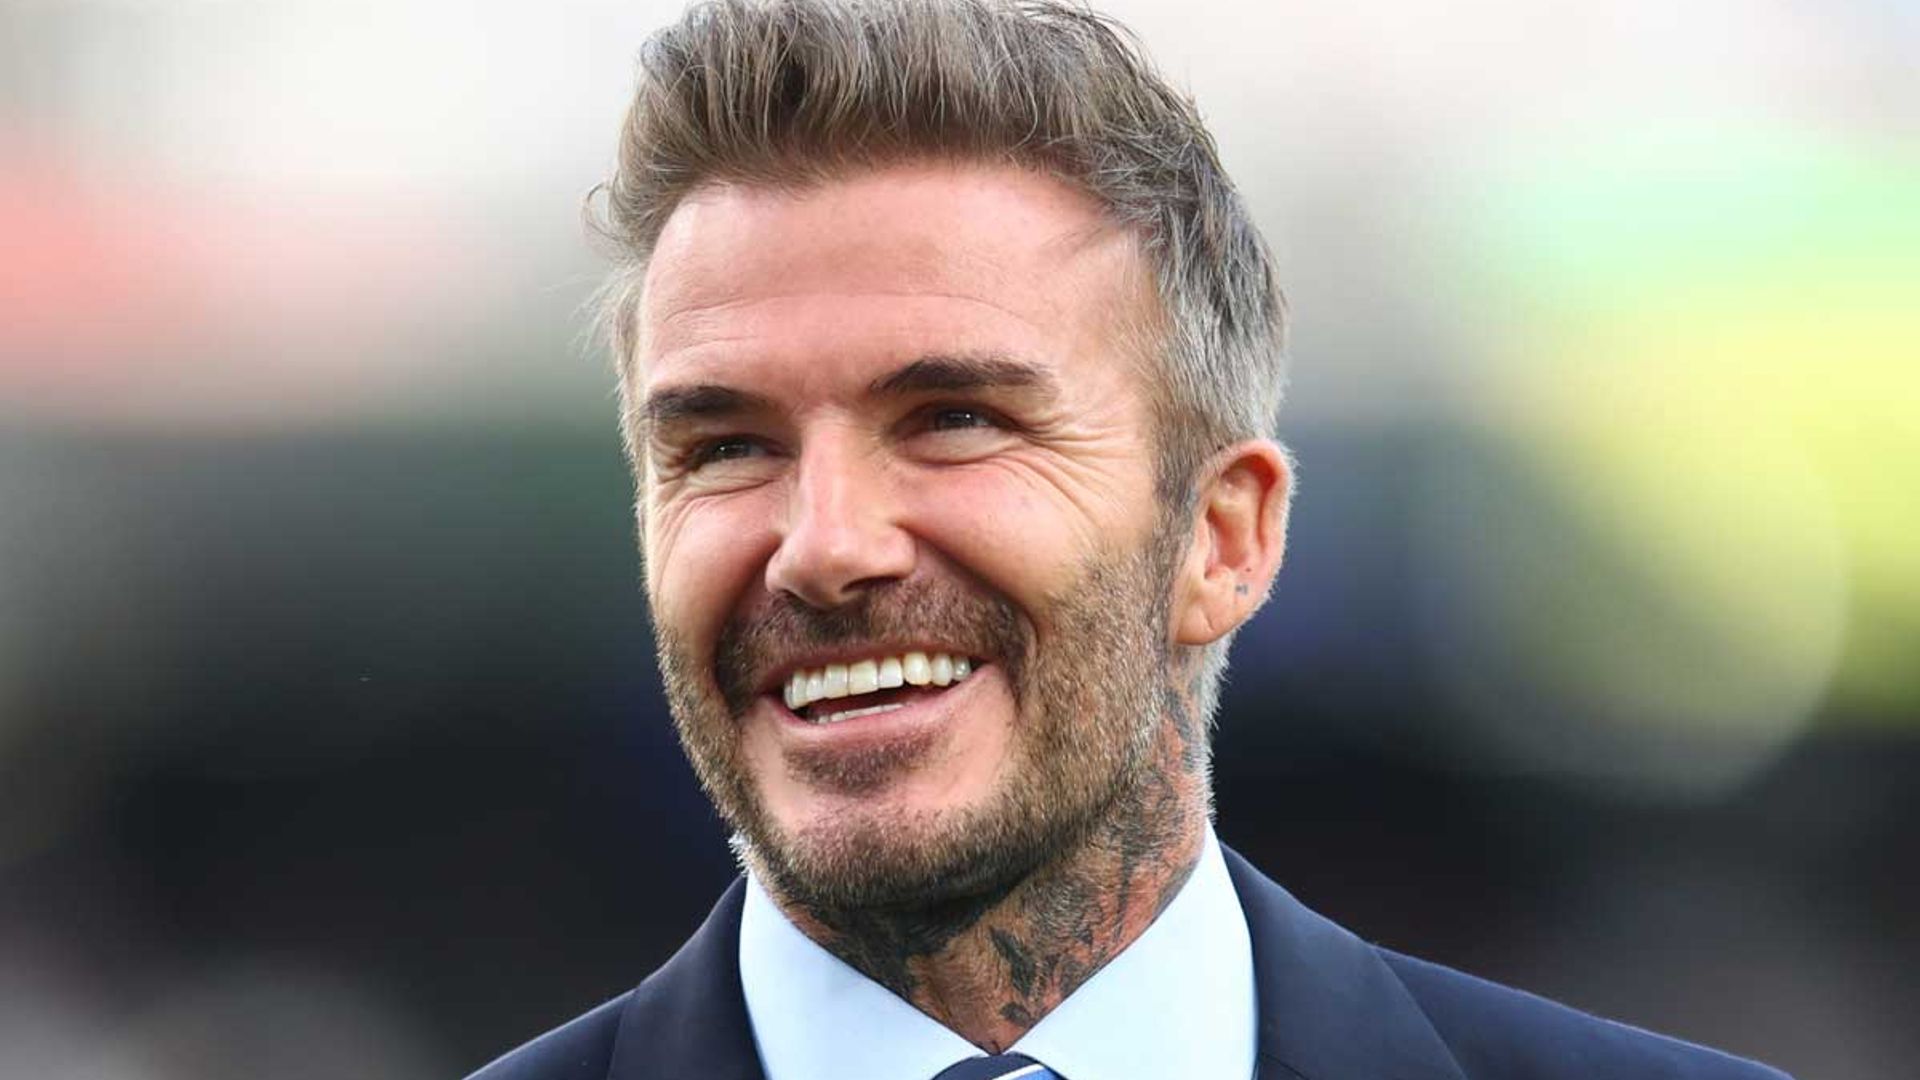 David Beckham workout secret: 'the one thing that repairs me'